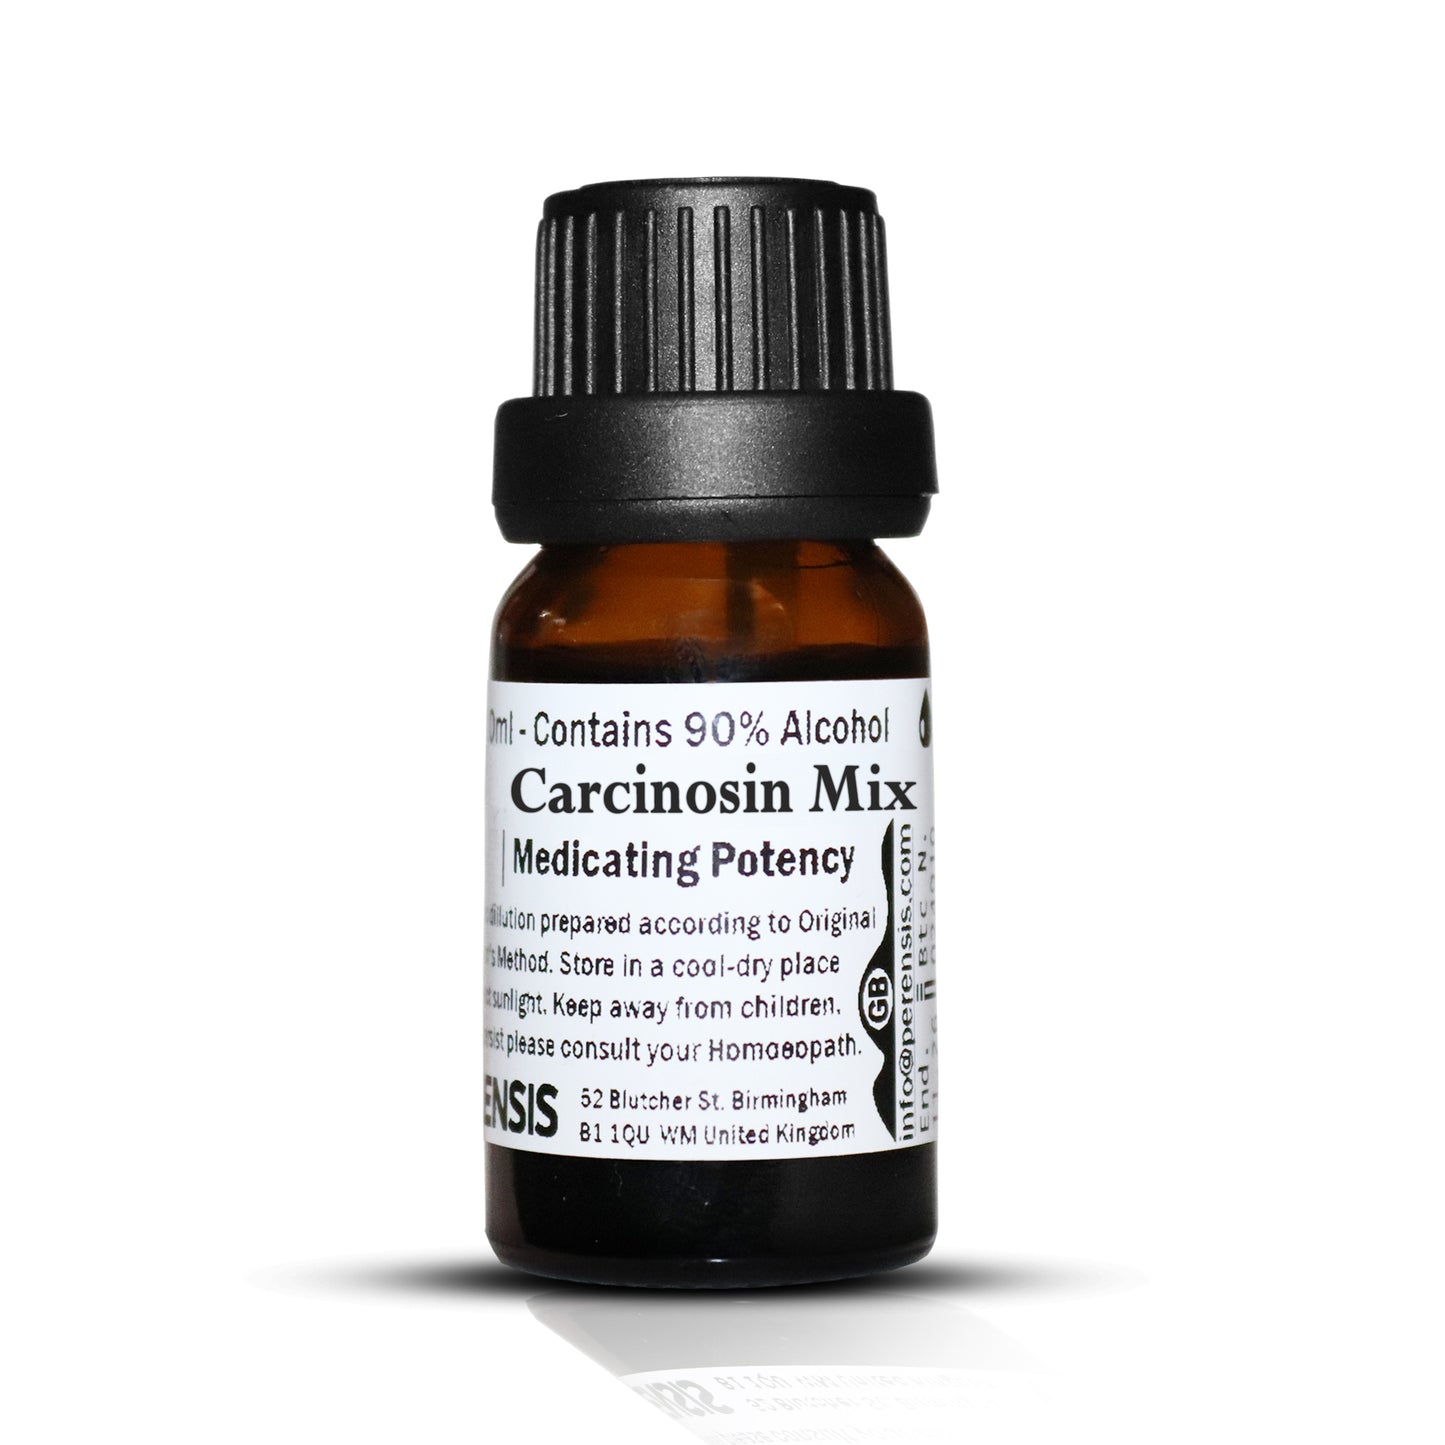 Carcinosin Mix